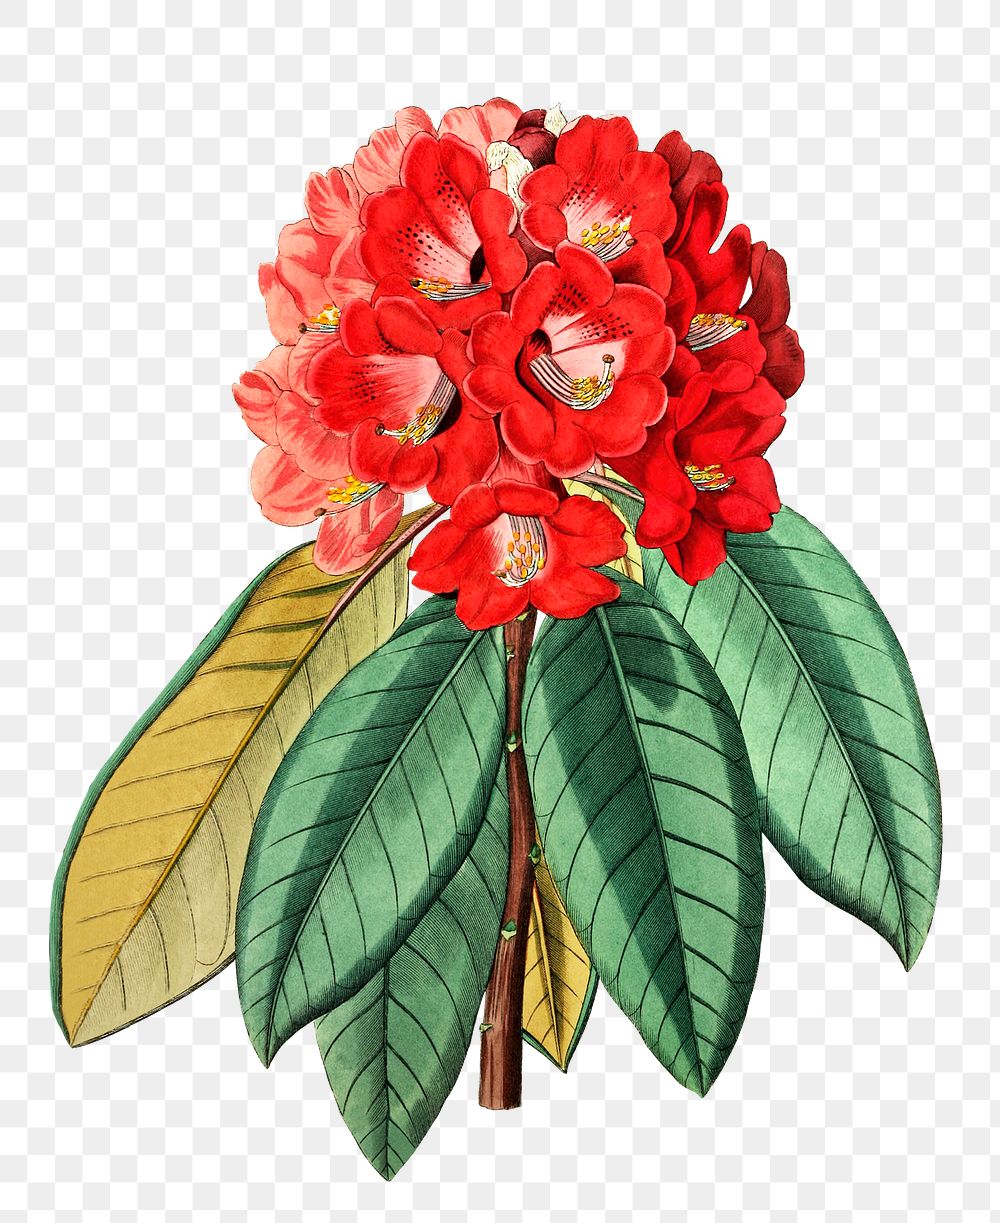 Vintage rhododendron flower png blooming illustration